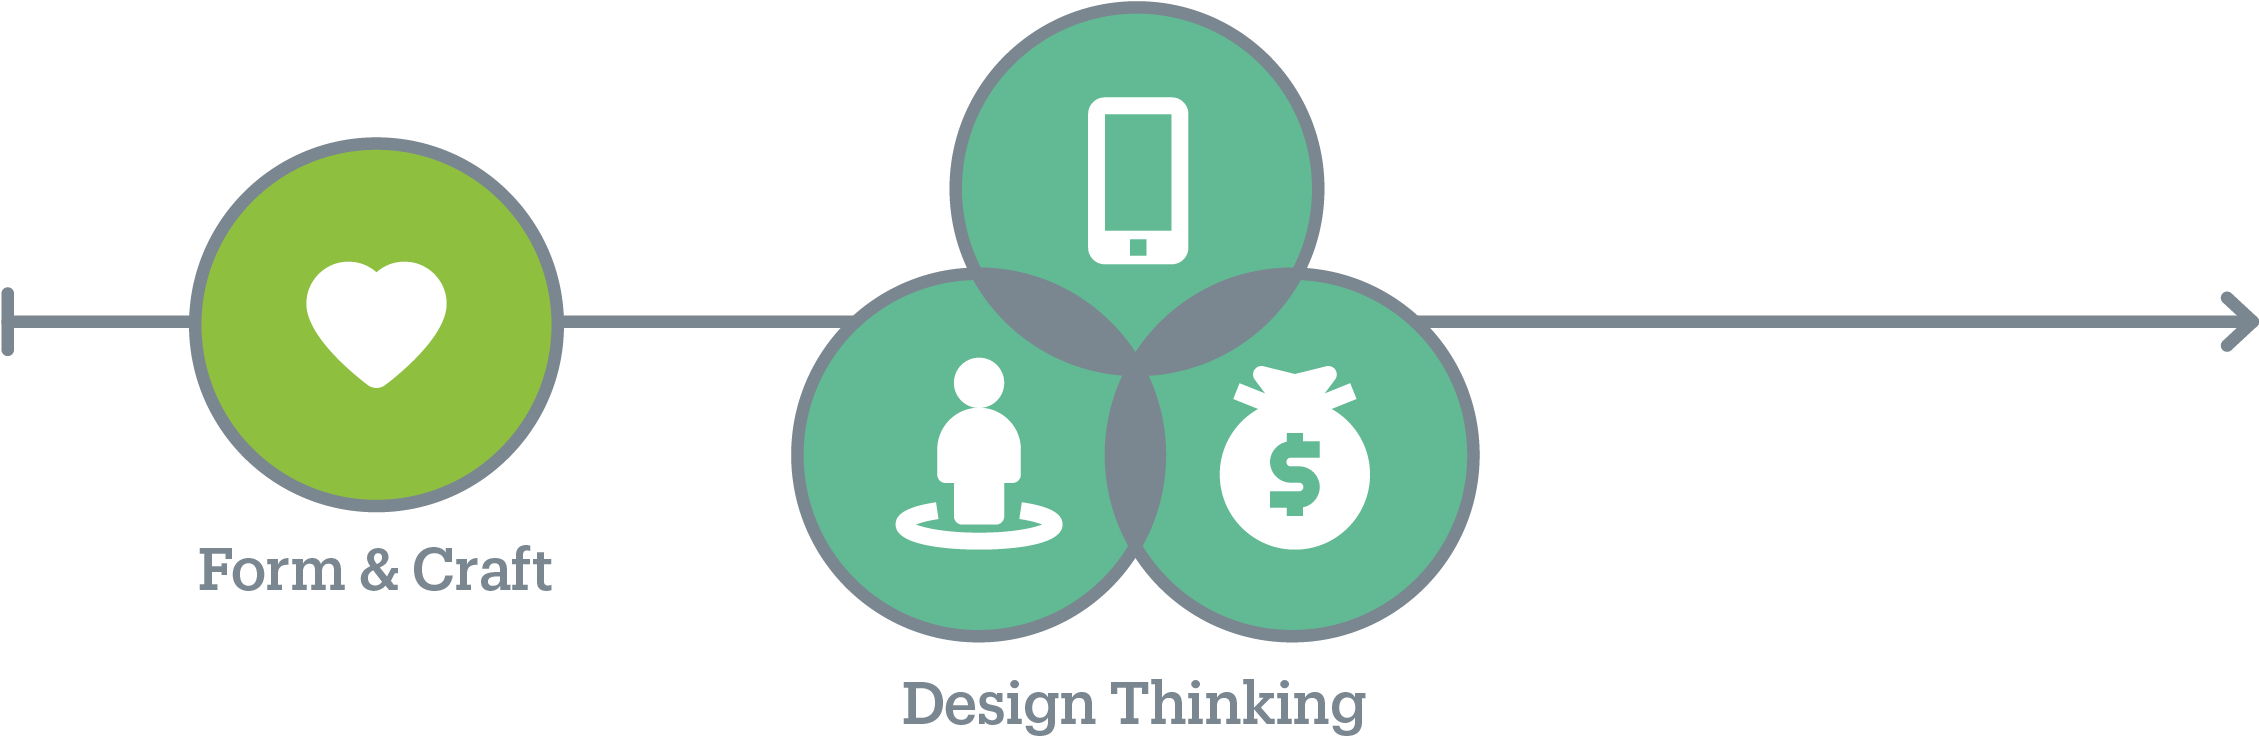 Design Thinking Concept Illustration PNG